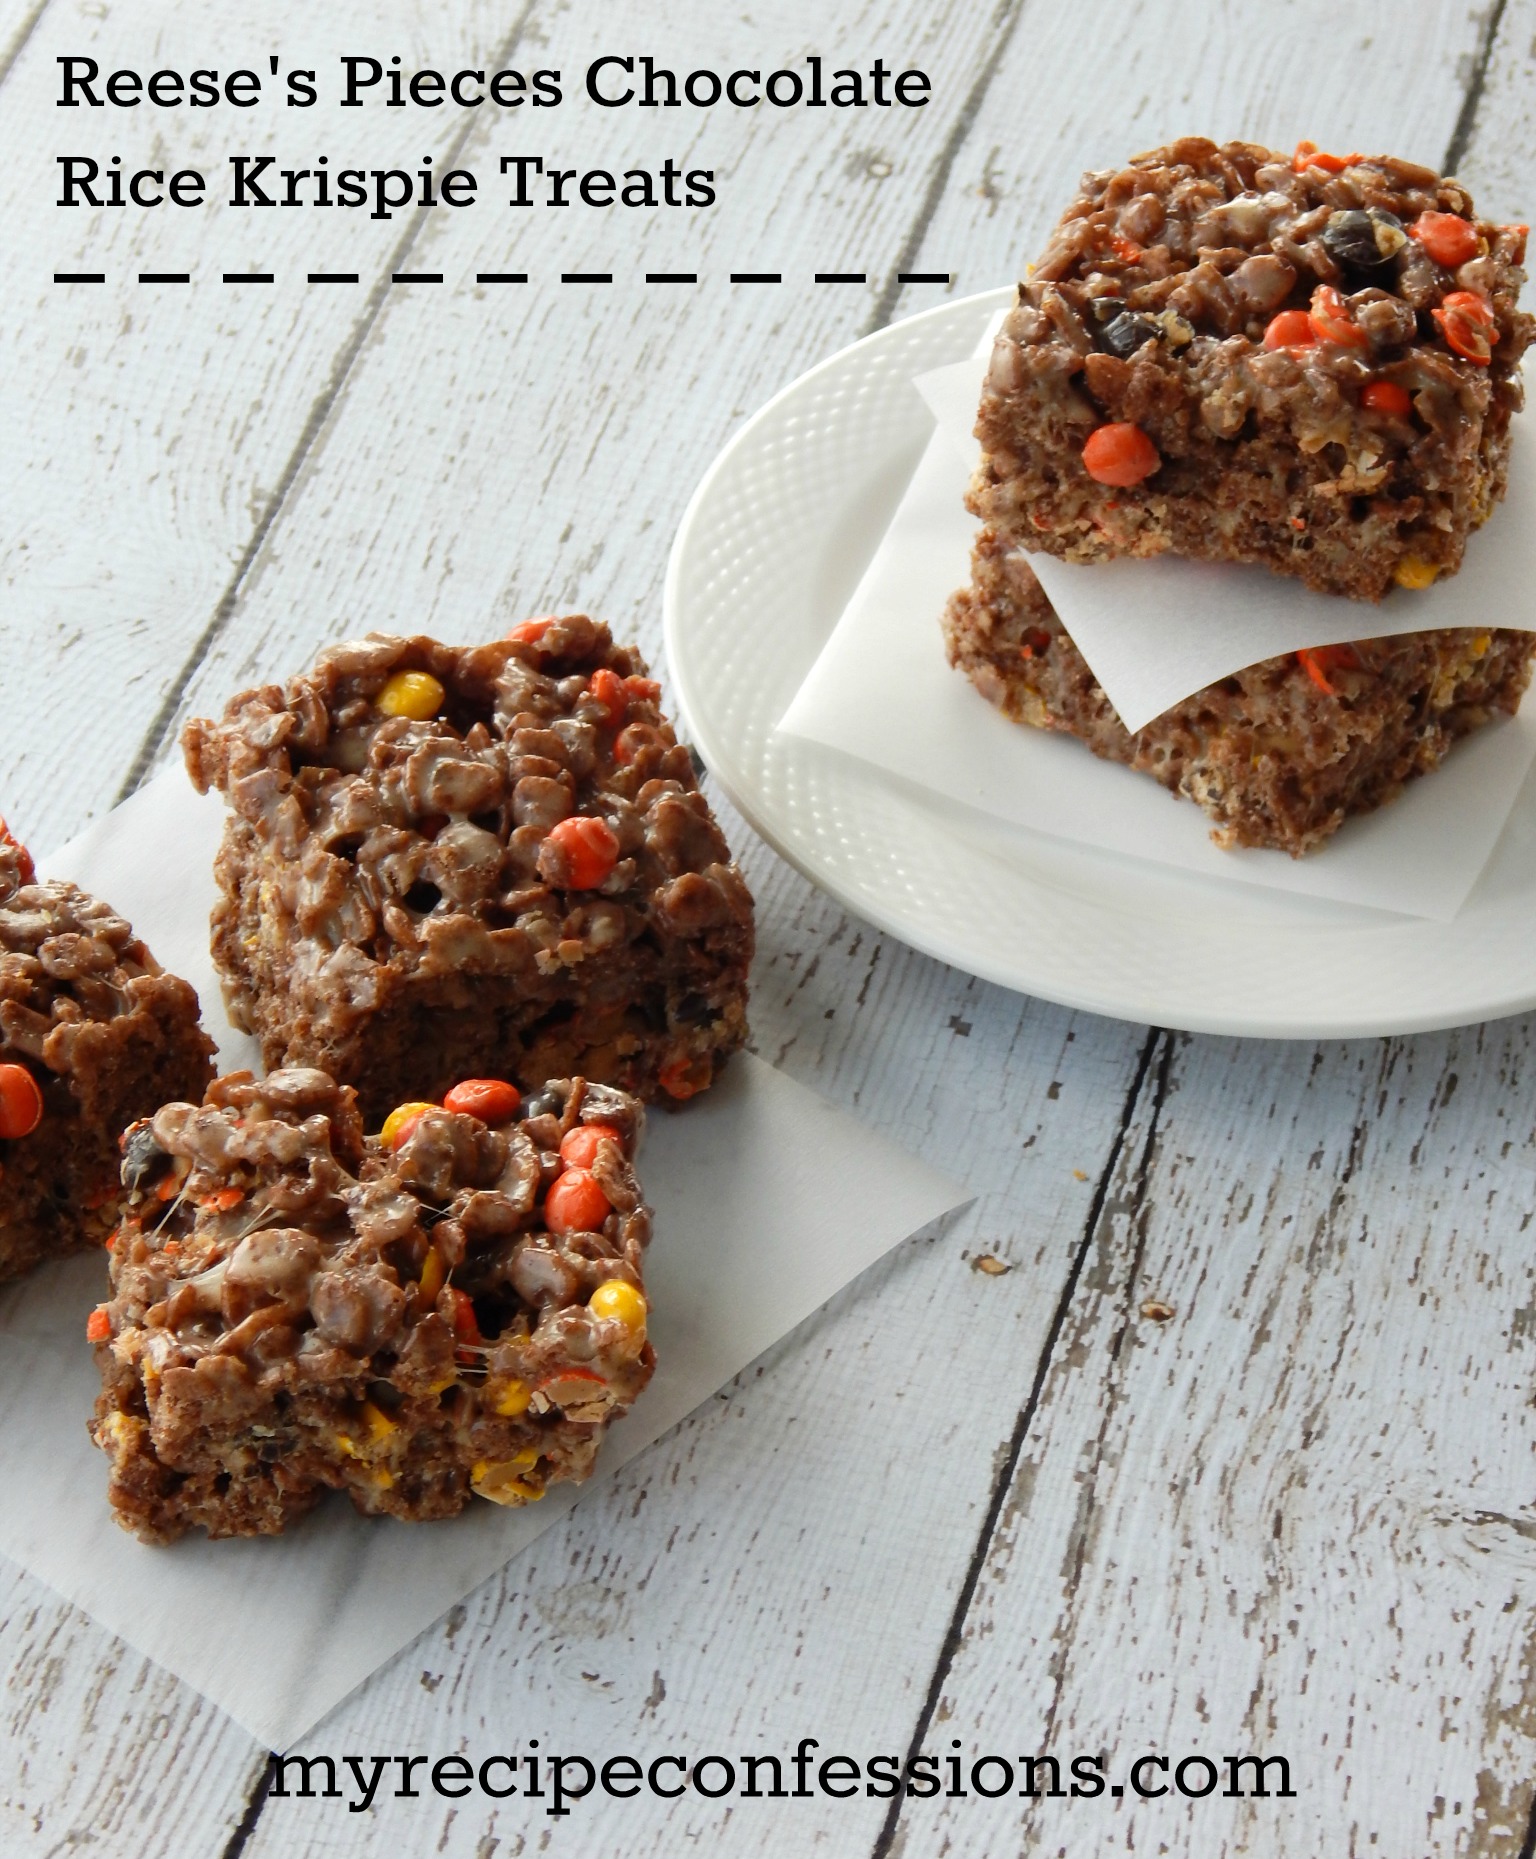 Reese's Pieces Chocolate Rice Krispie Treats